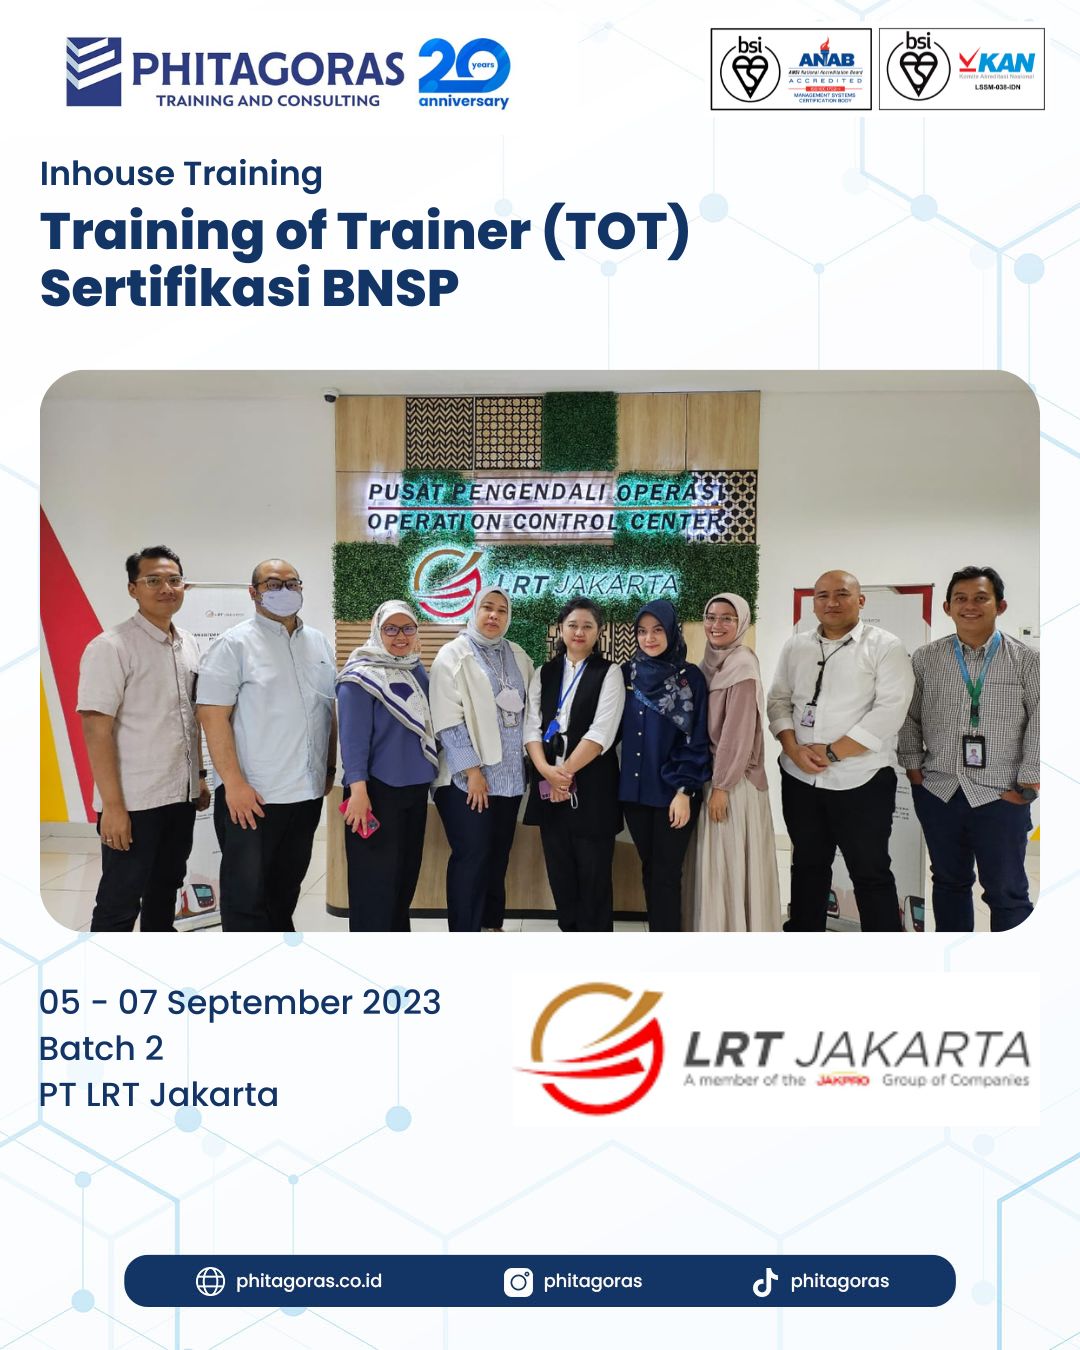 Inhouse Training Training of Trainer (TOT) Sertifikasi BNSP - PT LRT Jakarta